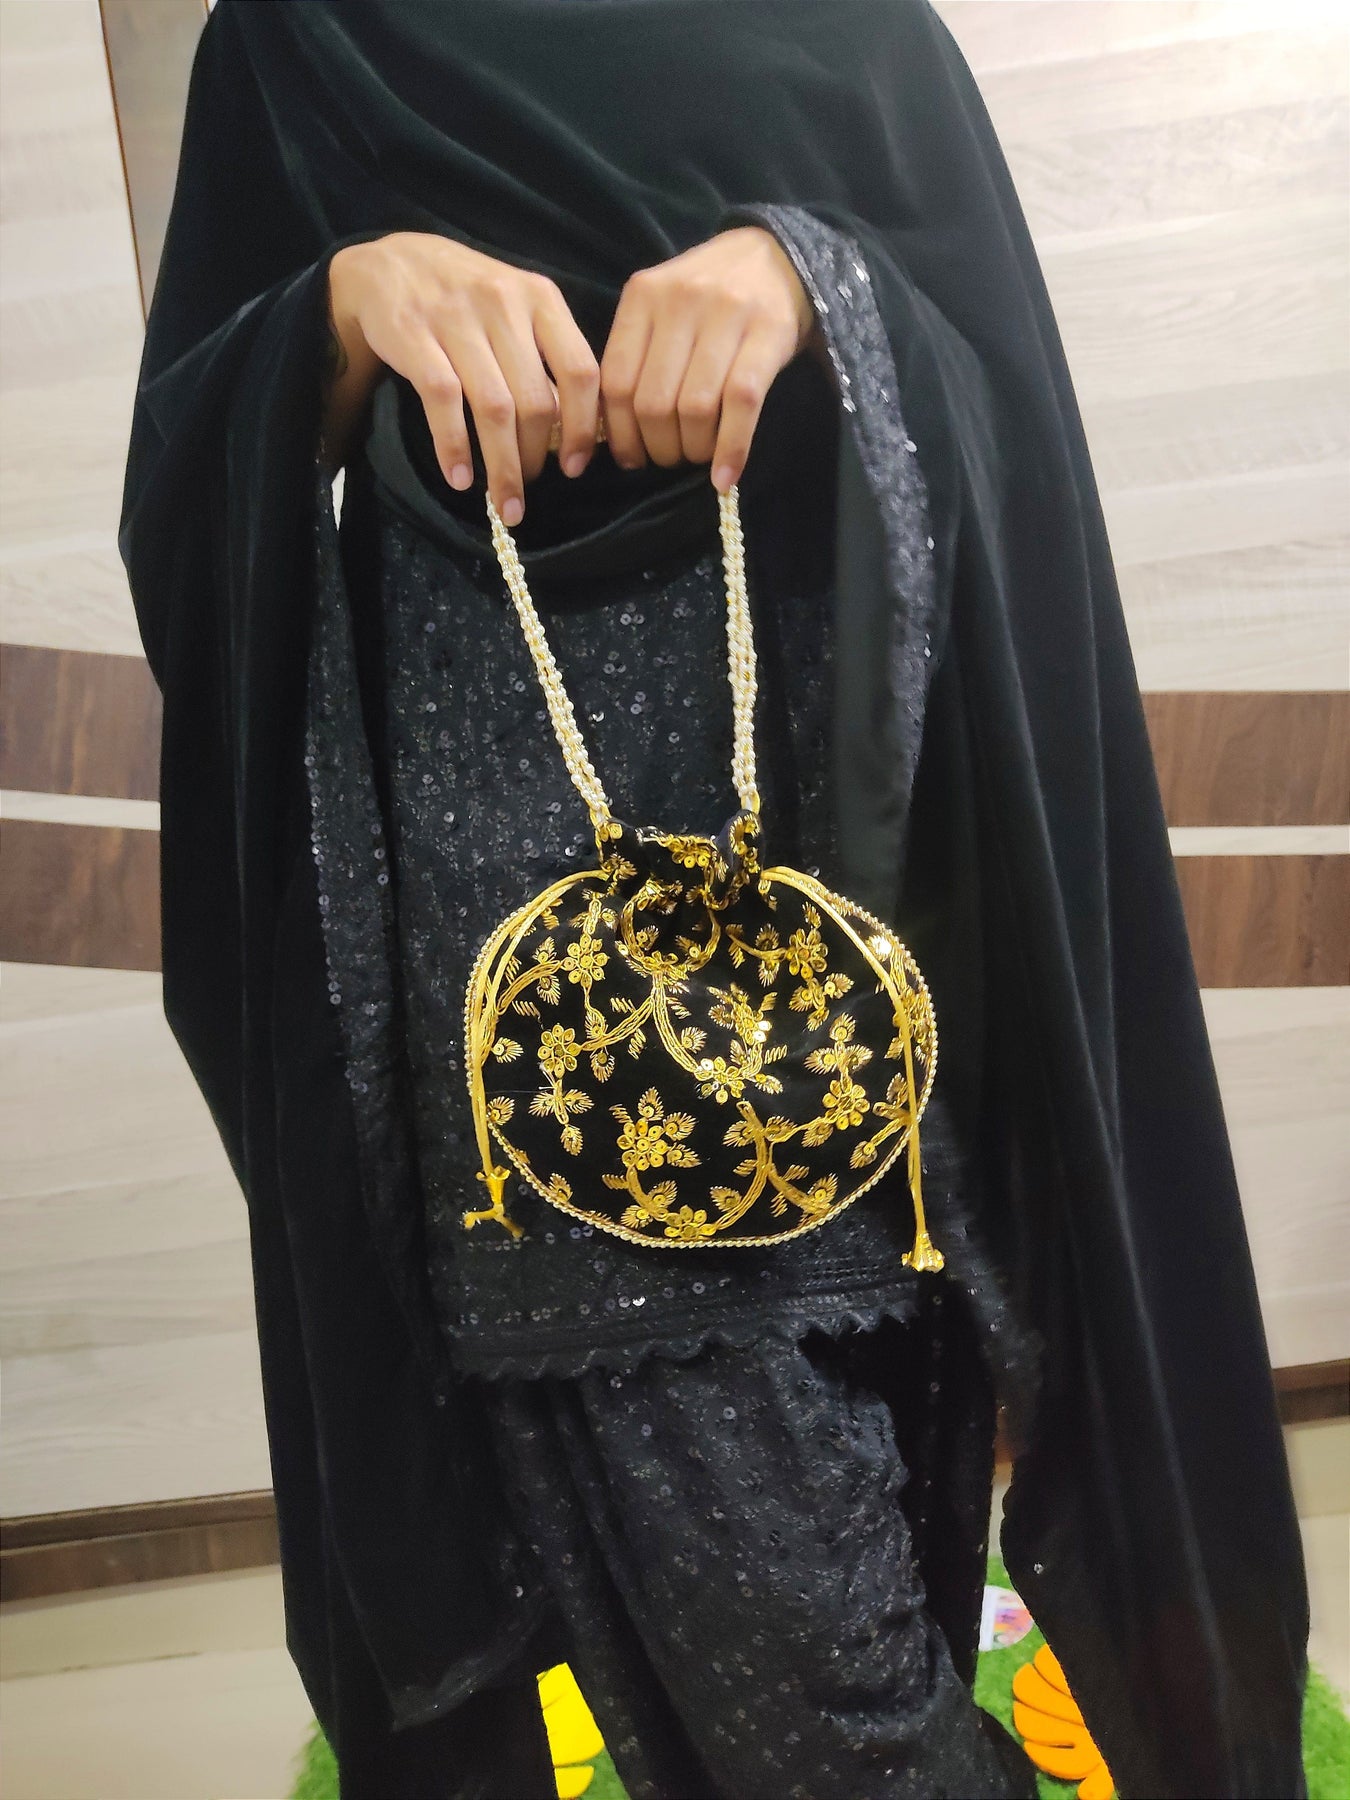 lamansh women s potli bag lamansh black sequin ethnic potli bag handbag for wedding ceremony designer potli bags for girls women perfect for gifting too